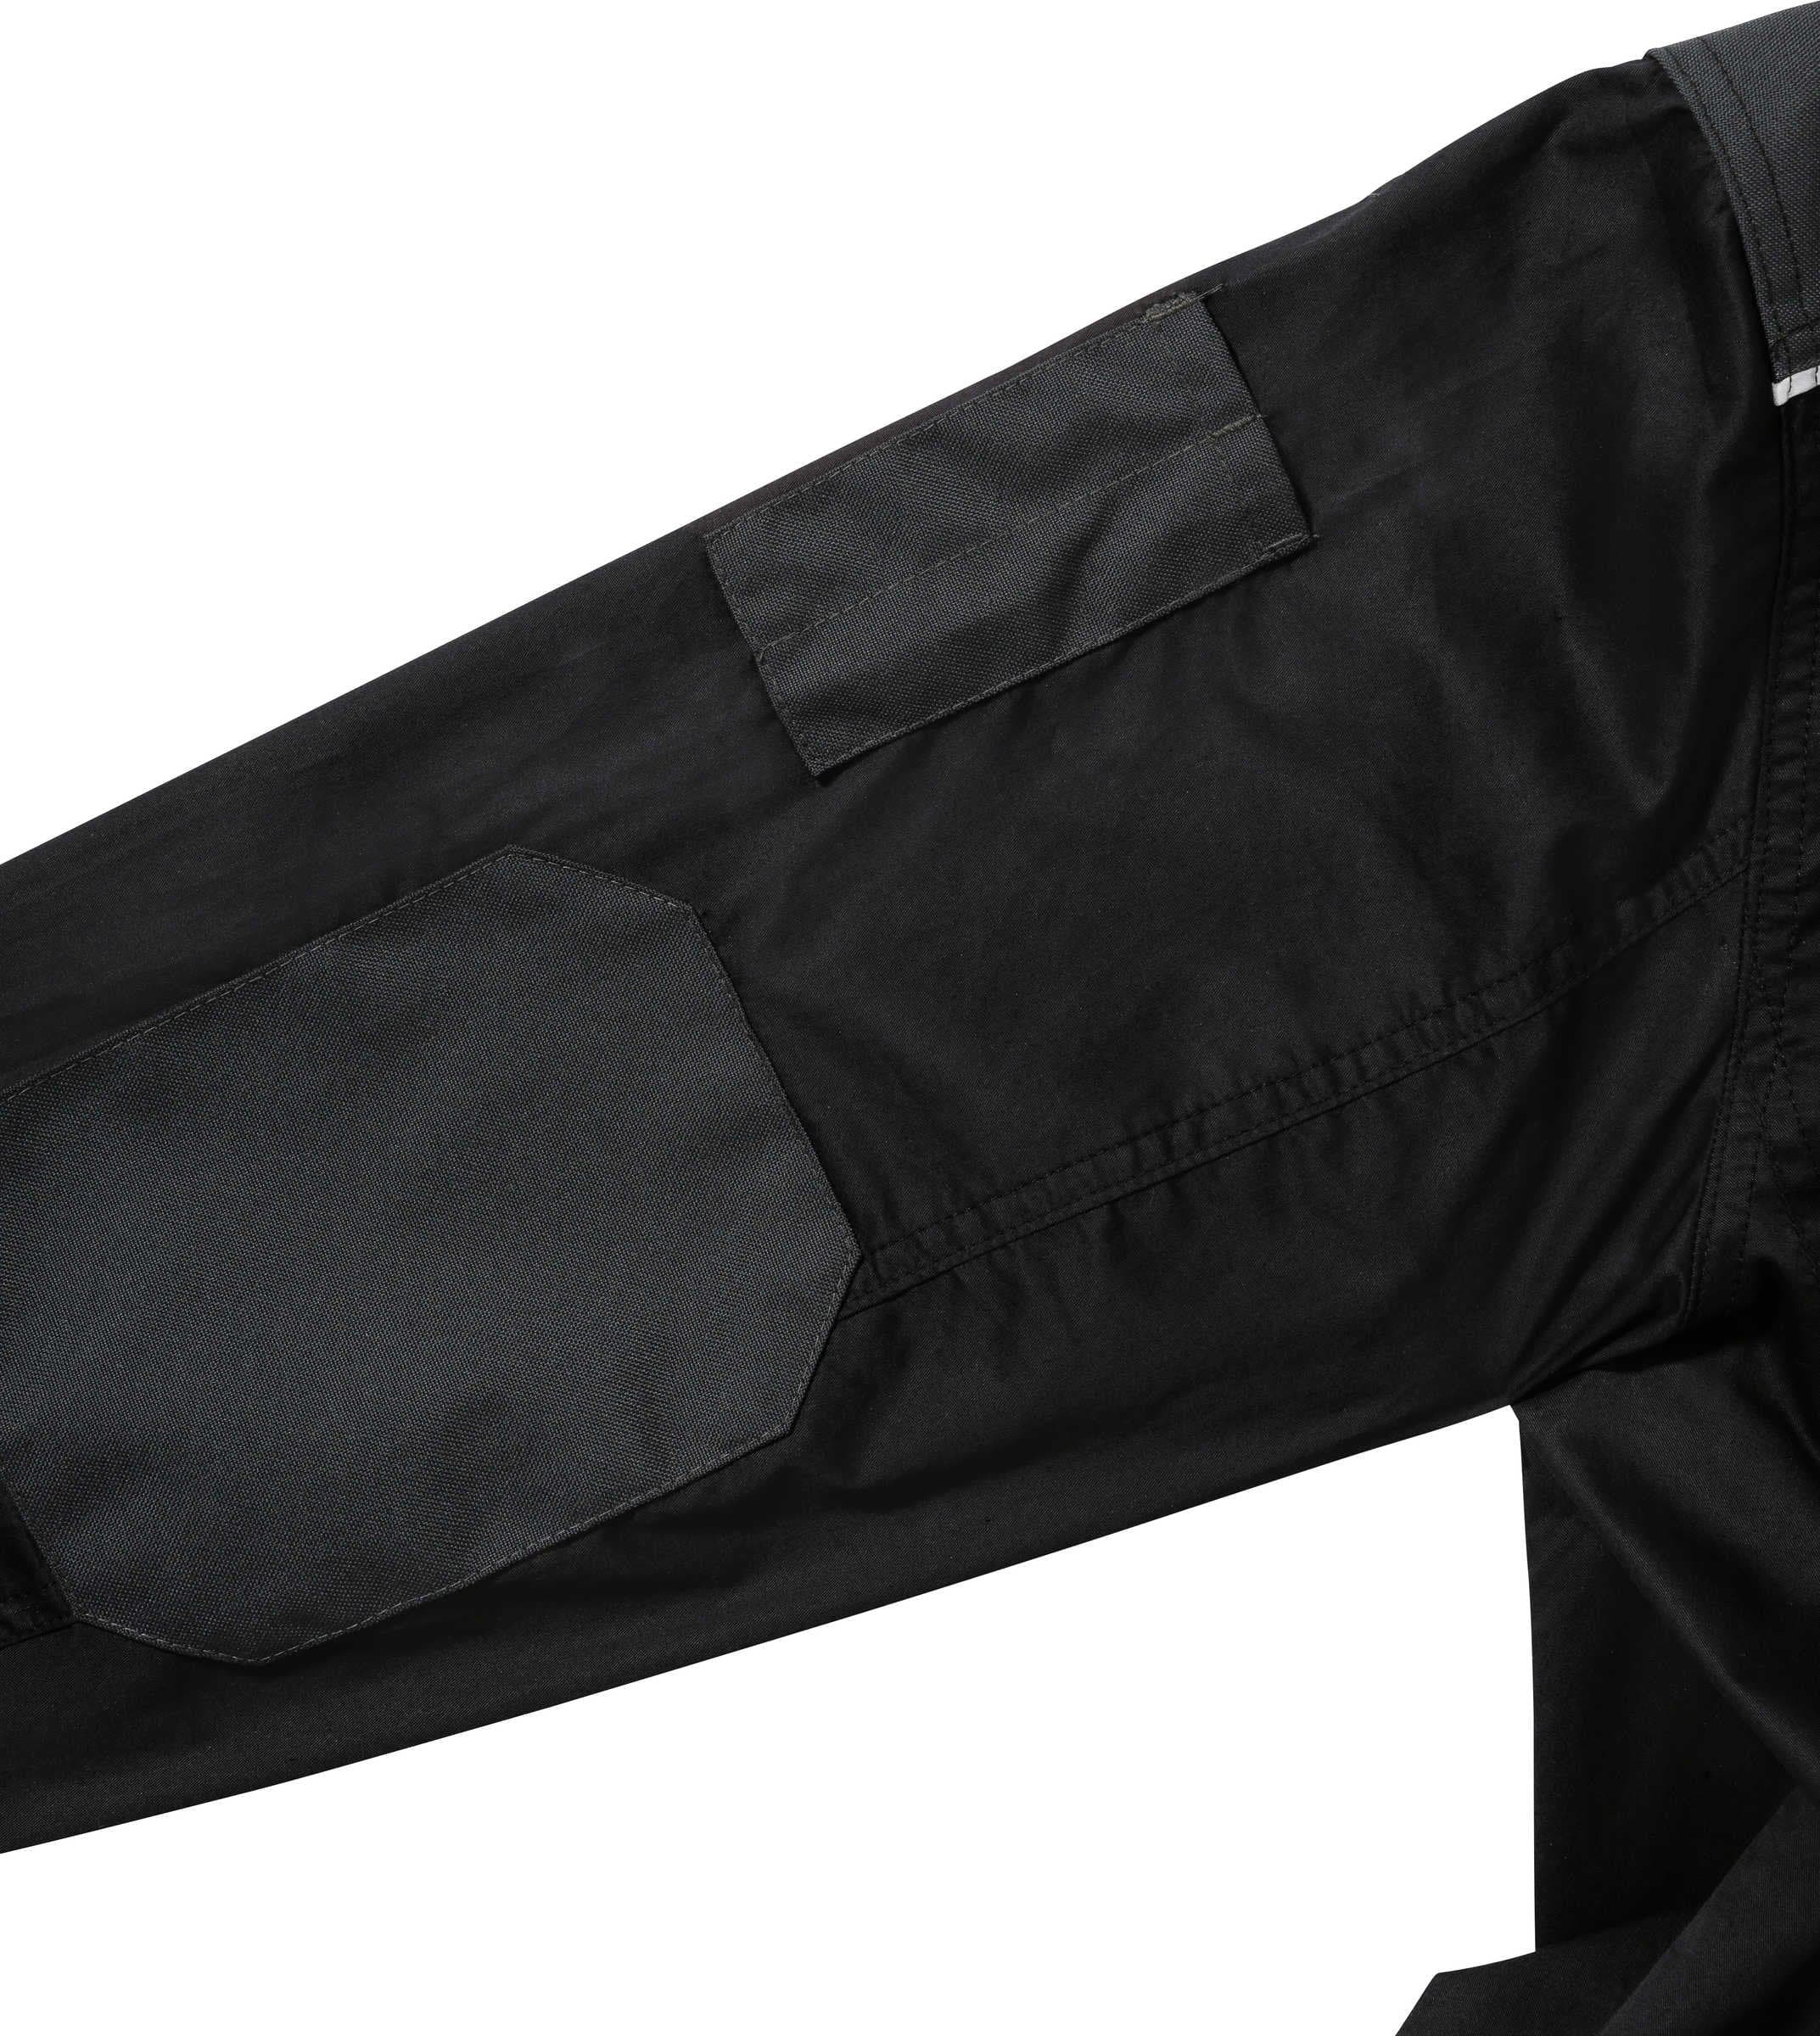 Bisley Flex & Move™ Mechanical Stretch Shirt Long Sleeve (BS6133) - Trade Wear